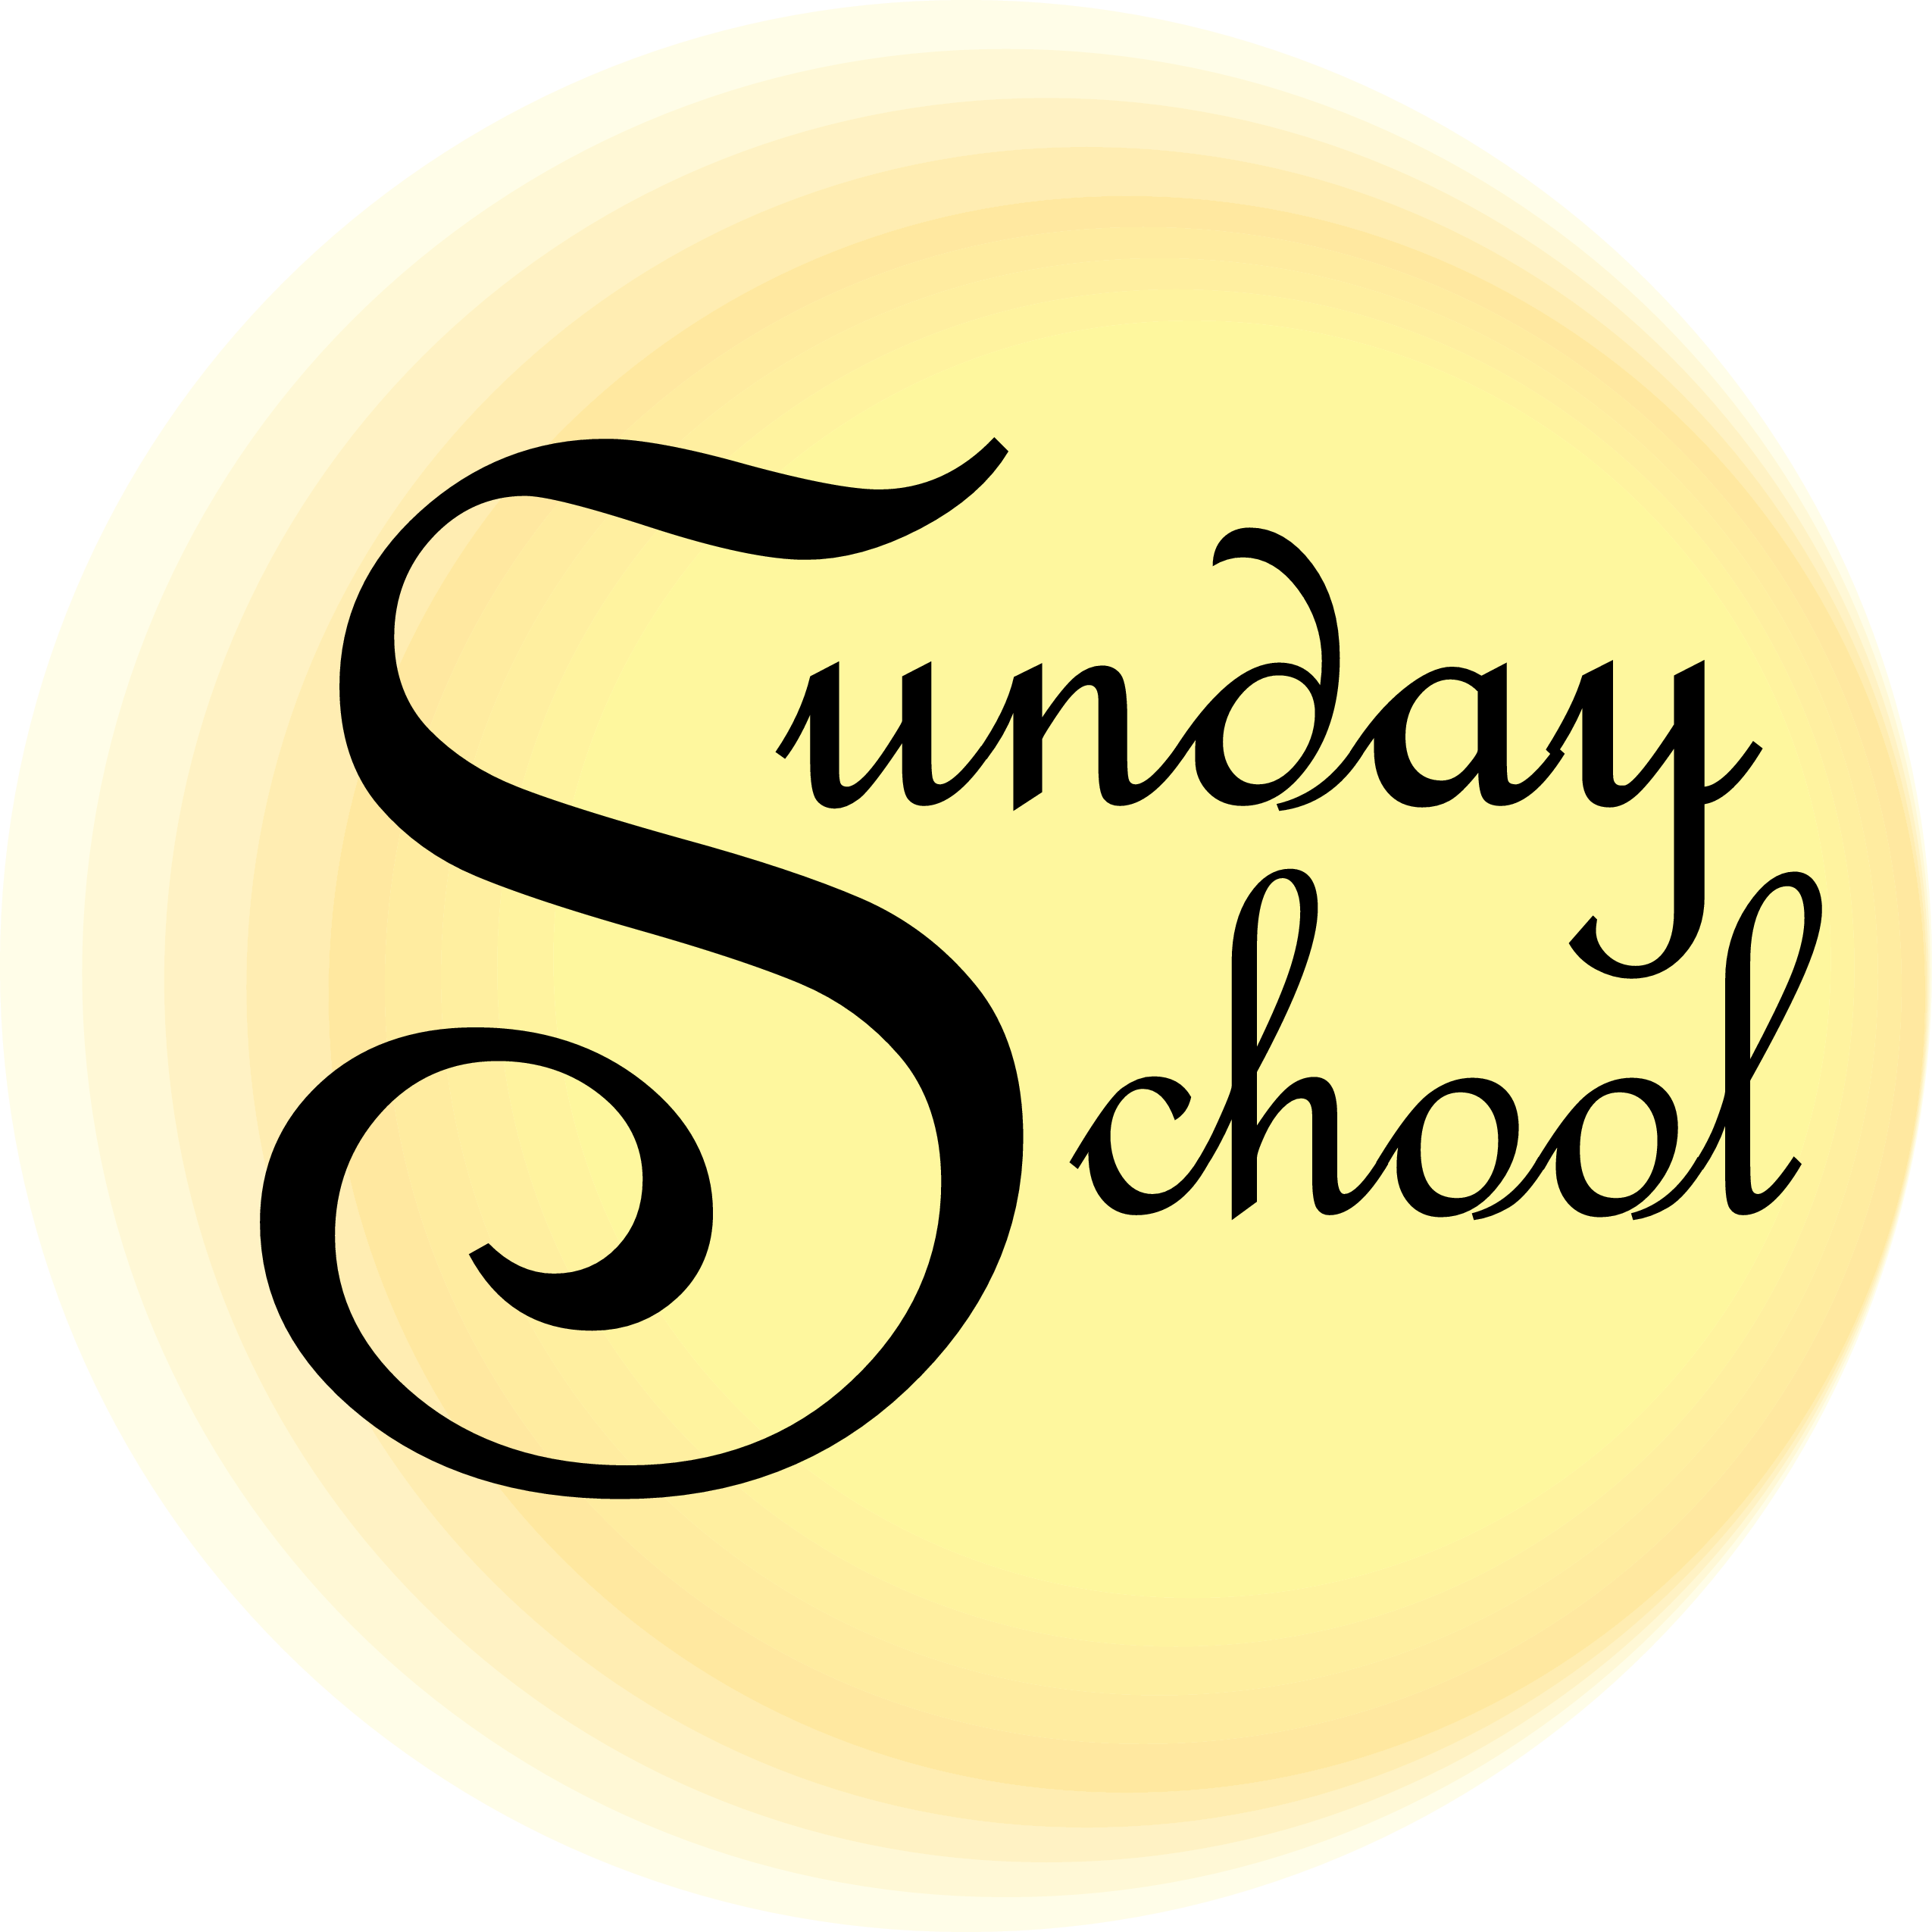 free christian clipart sunday school - photo #12